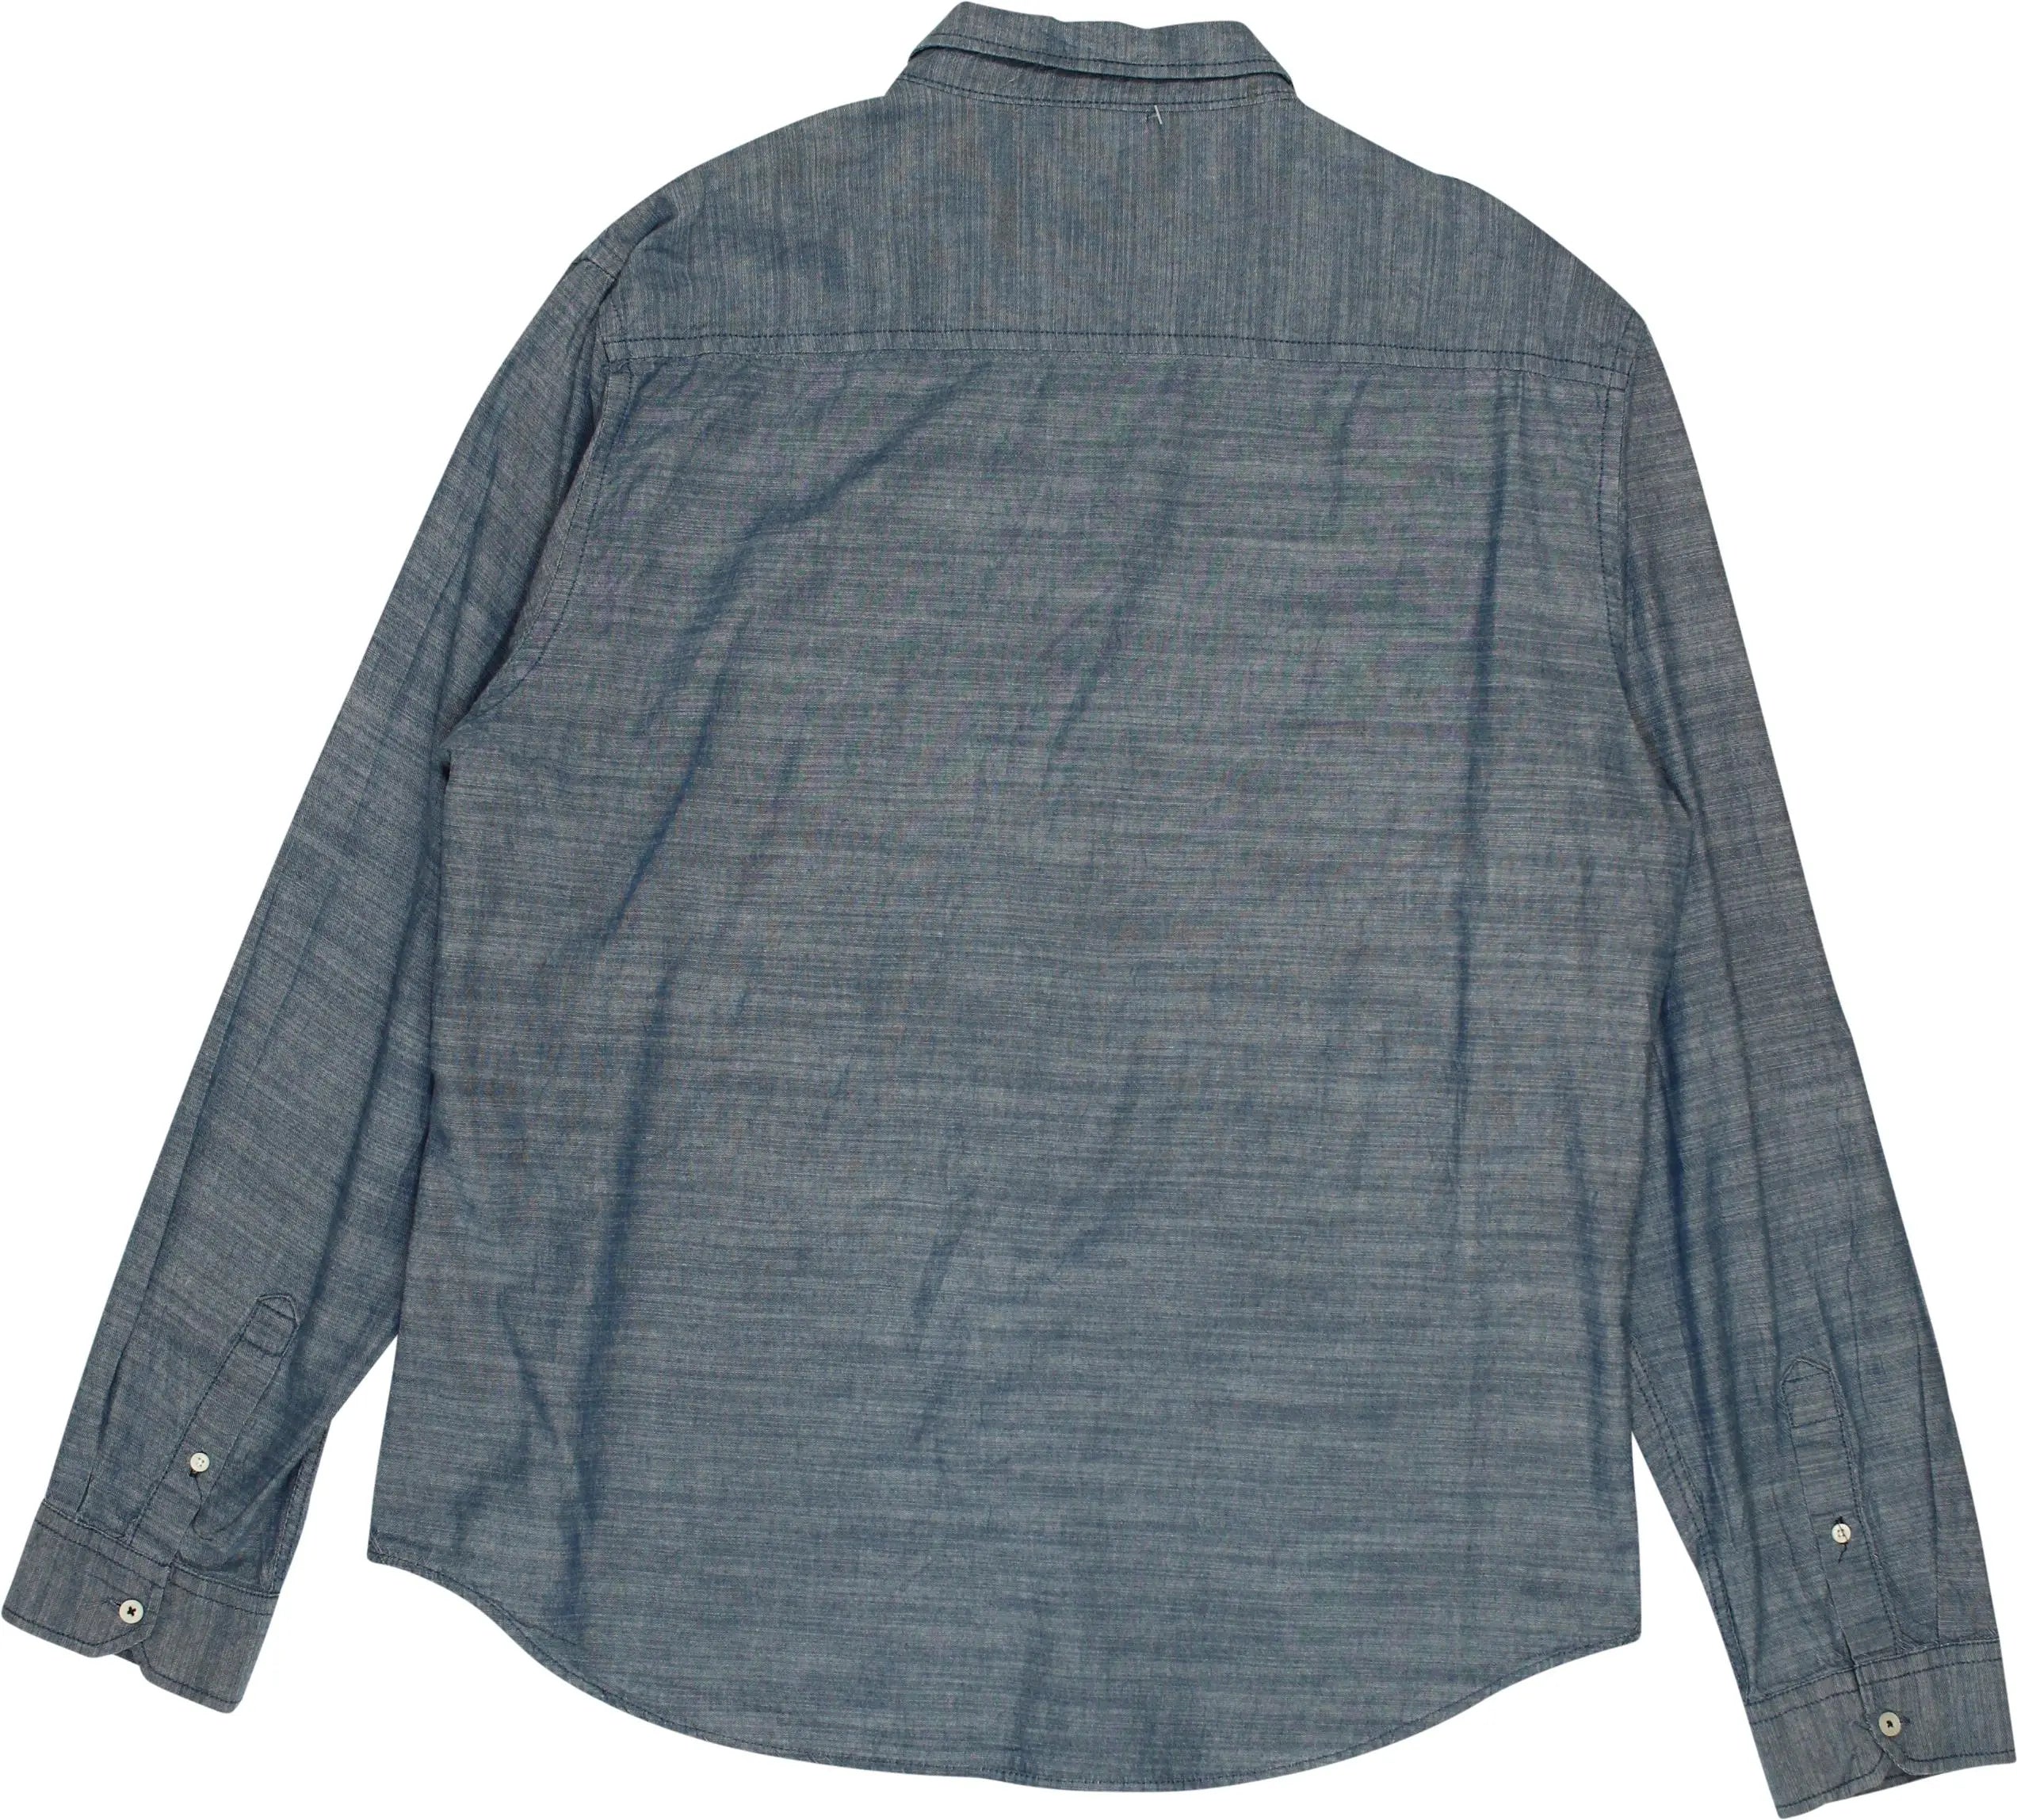 Aéropostale - Denim Shirt- ThriftTale.com - Vintage and second handclothing